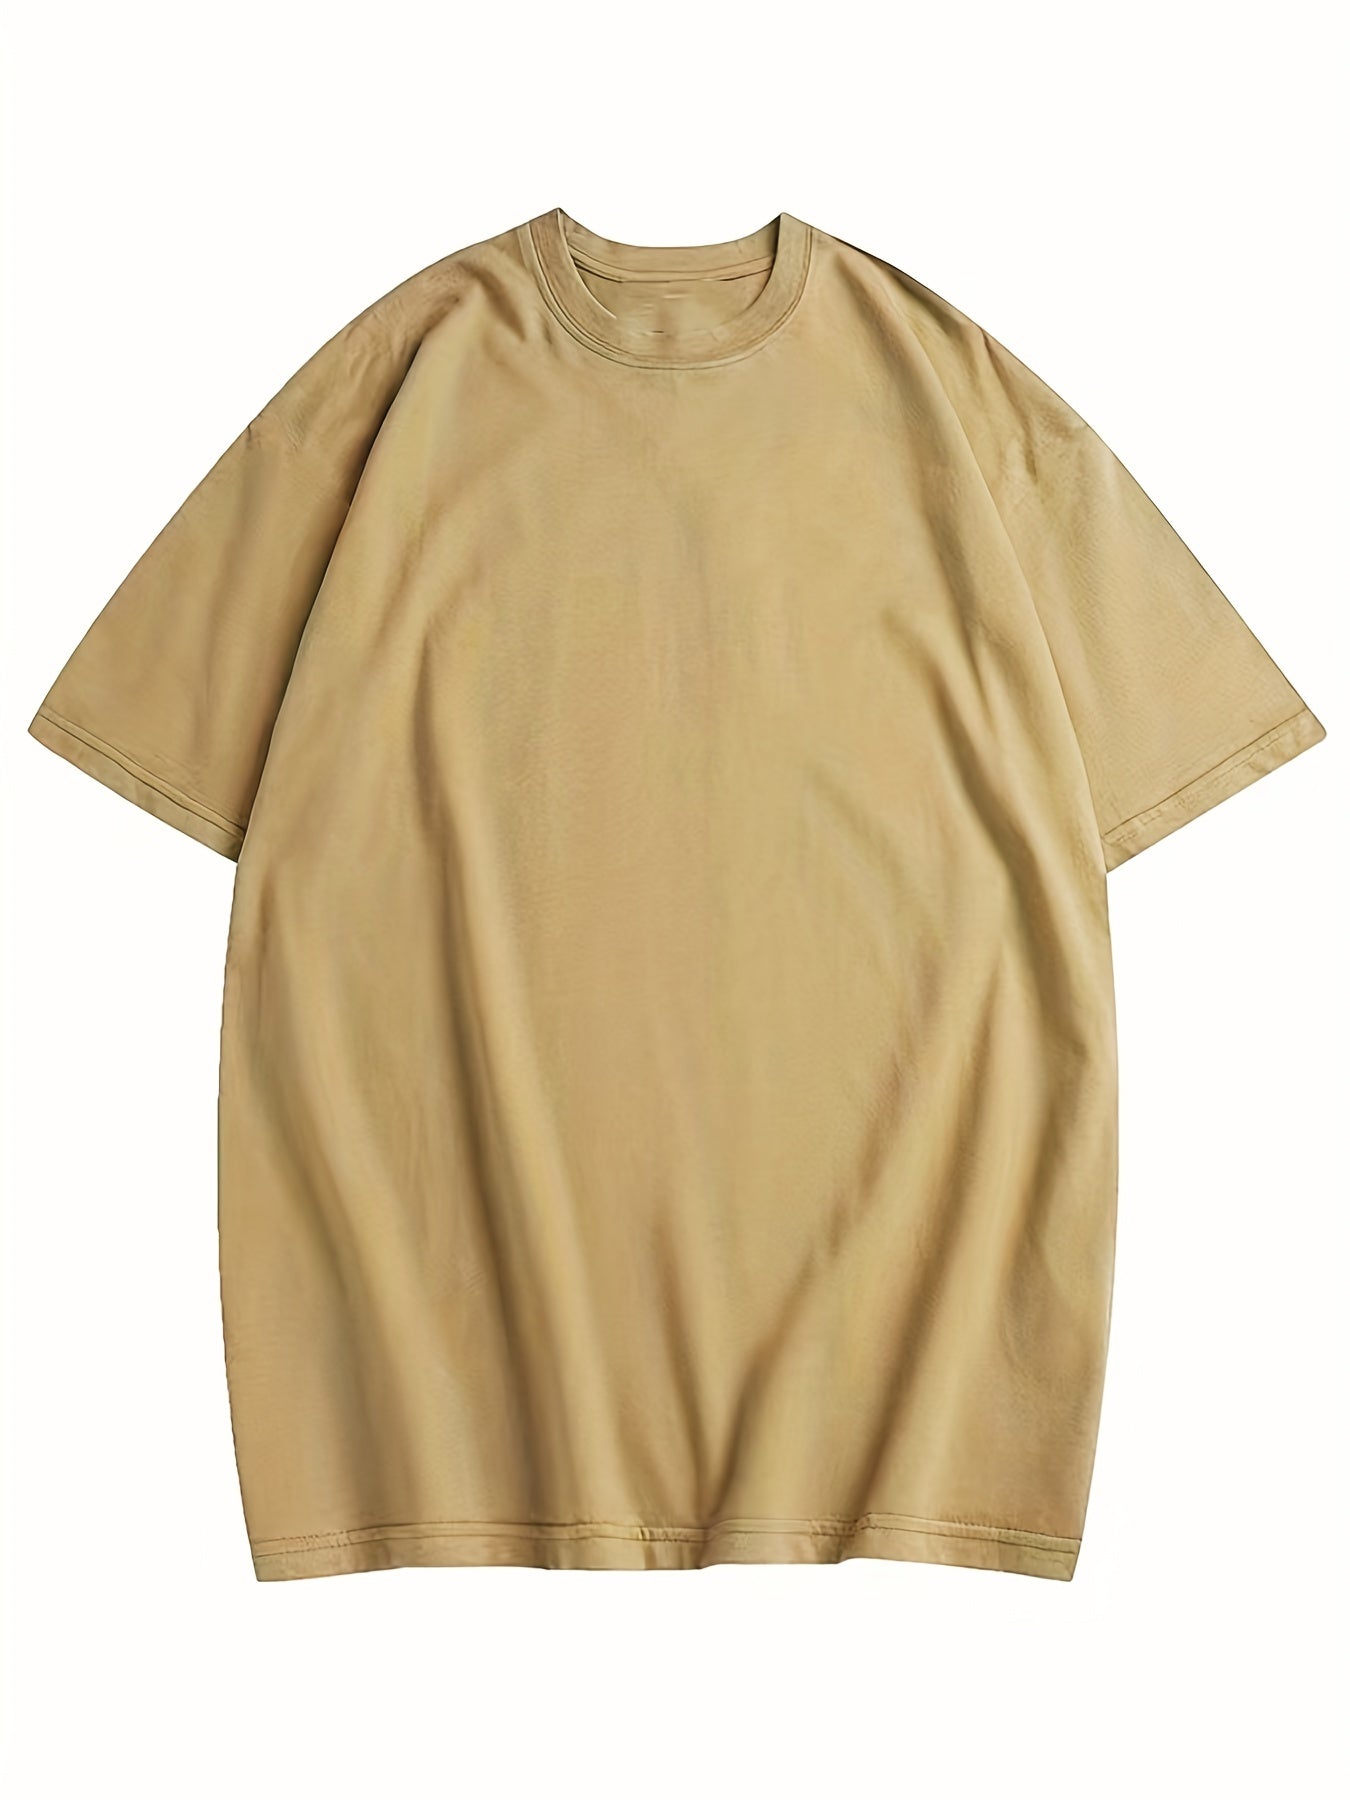 Men's Casual Classic T-Shirts, Solid Color Crew Neck Comfy Fashion Tees Top Summer Clothes